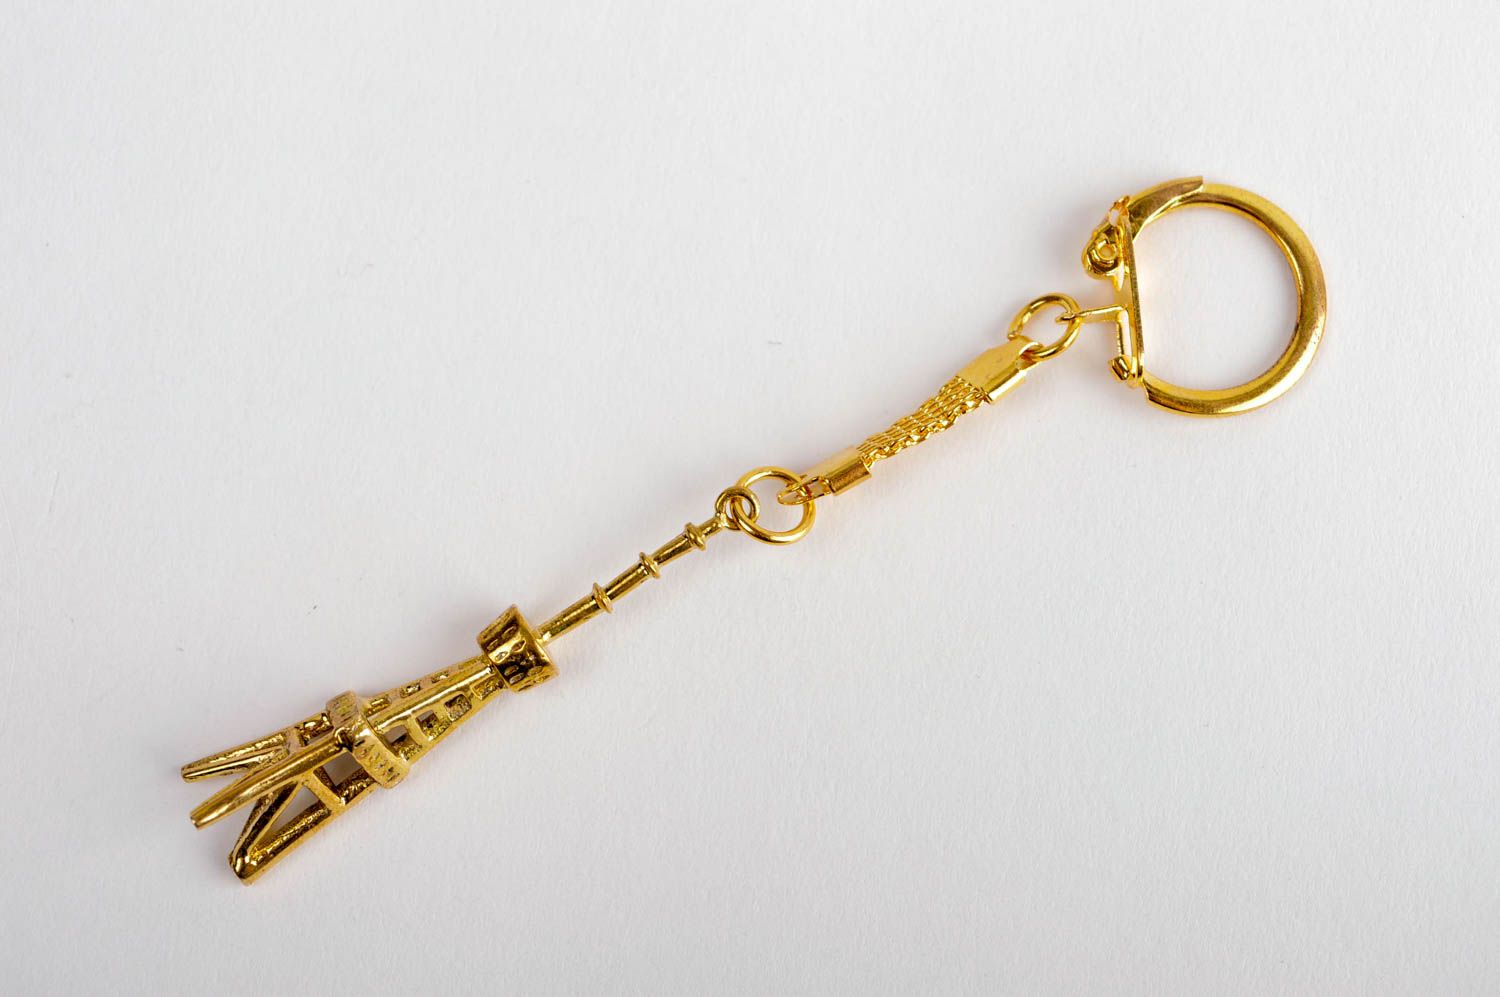 Unusual handmade metal keychain handmade accessories cool keyrings gift ideas photo 3